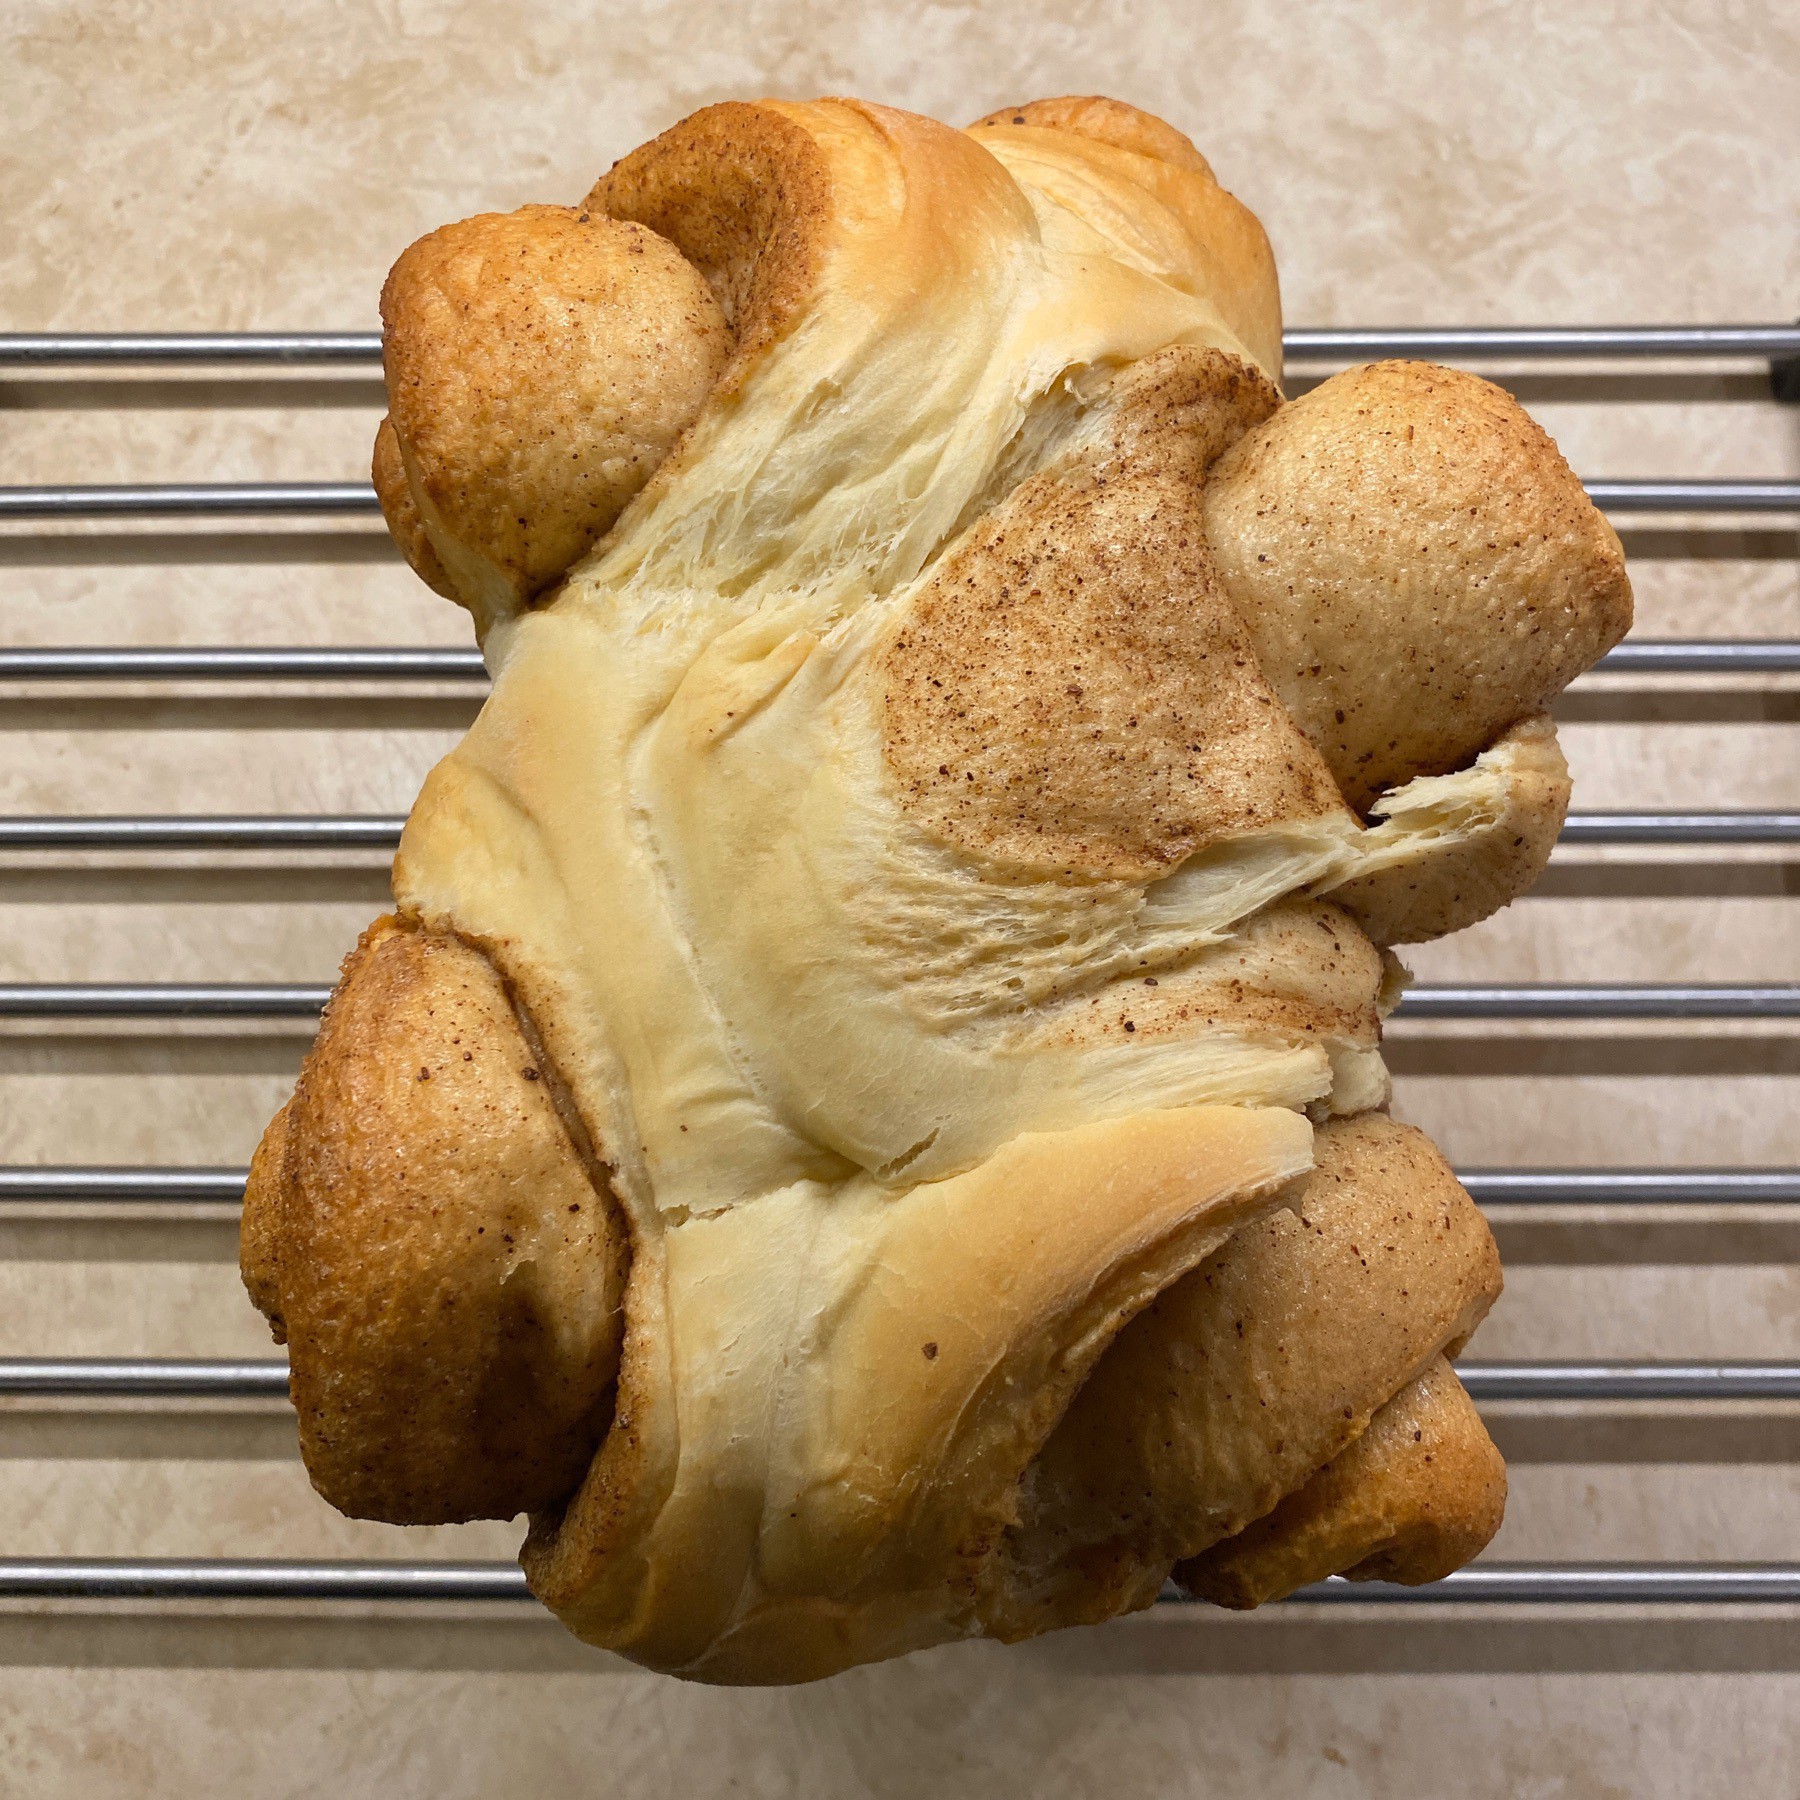 Cinnamon bun bread loaf cooling on rack.